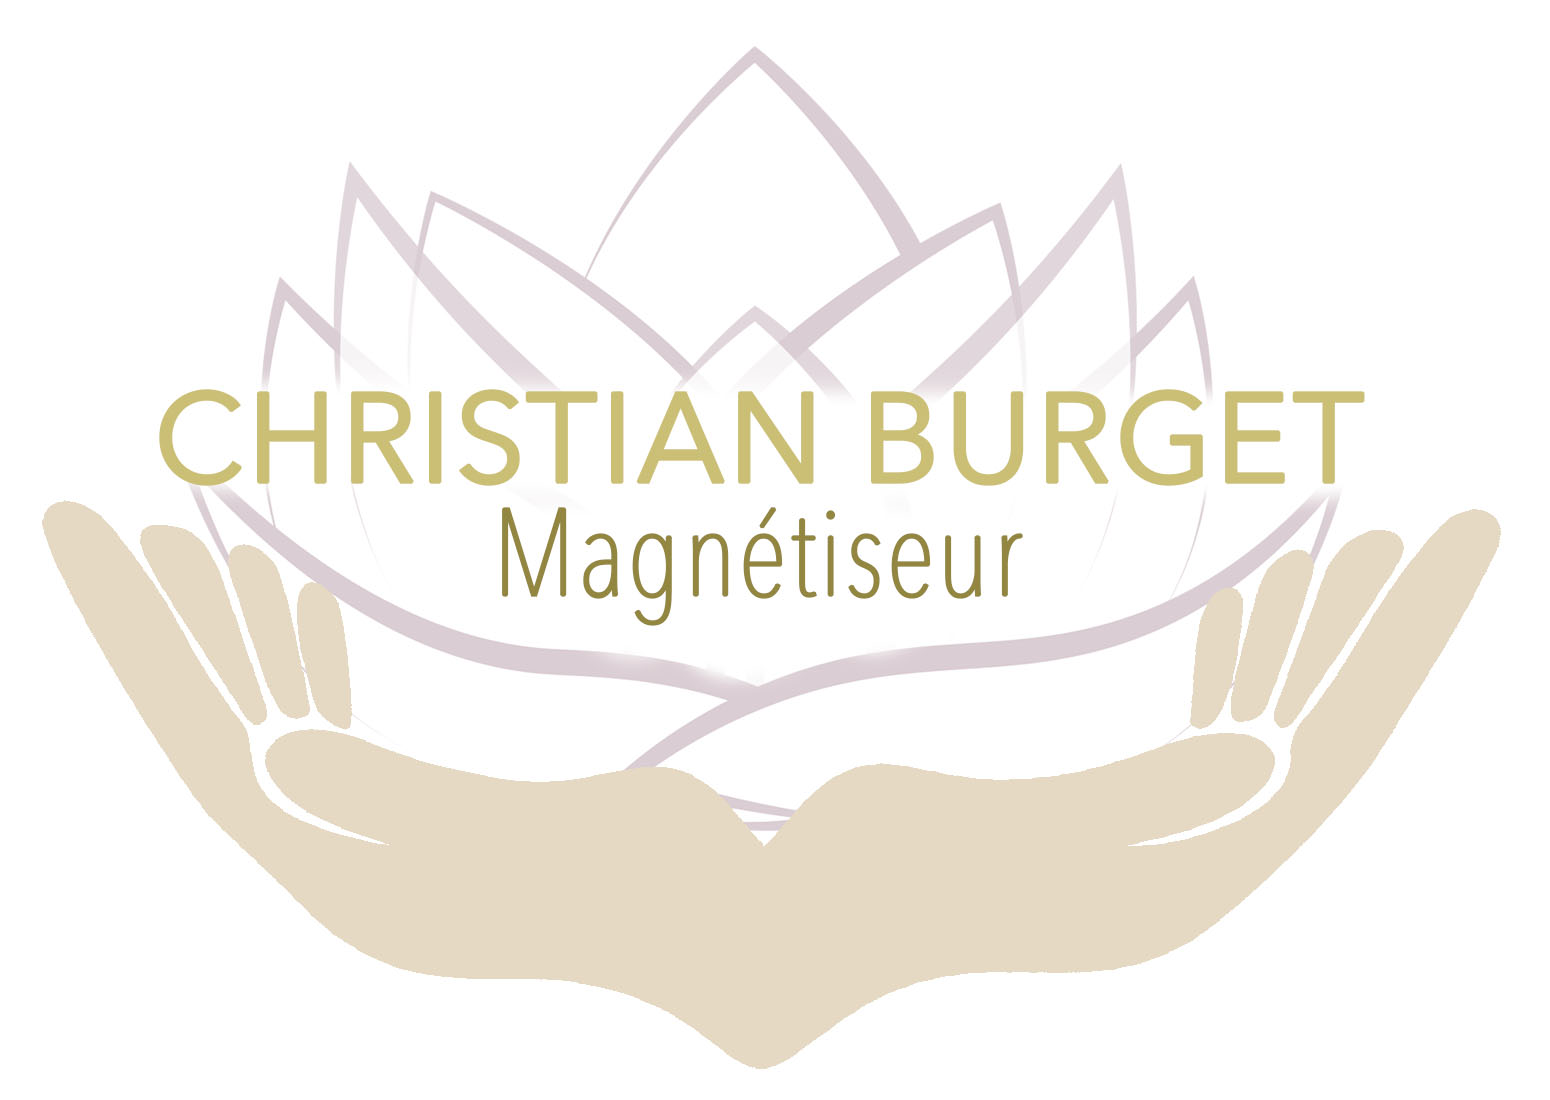 Christian Burget Magnetiseur